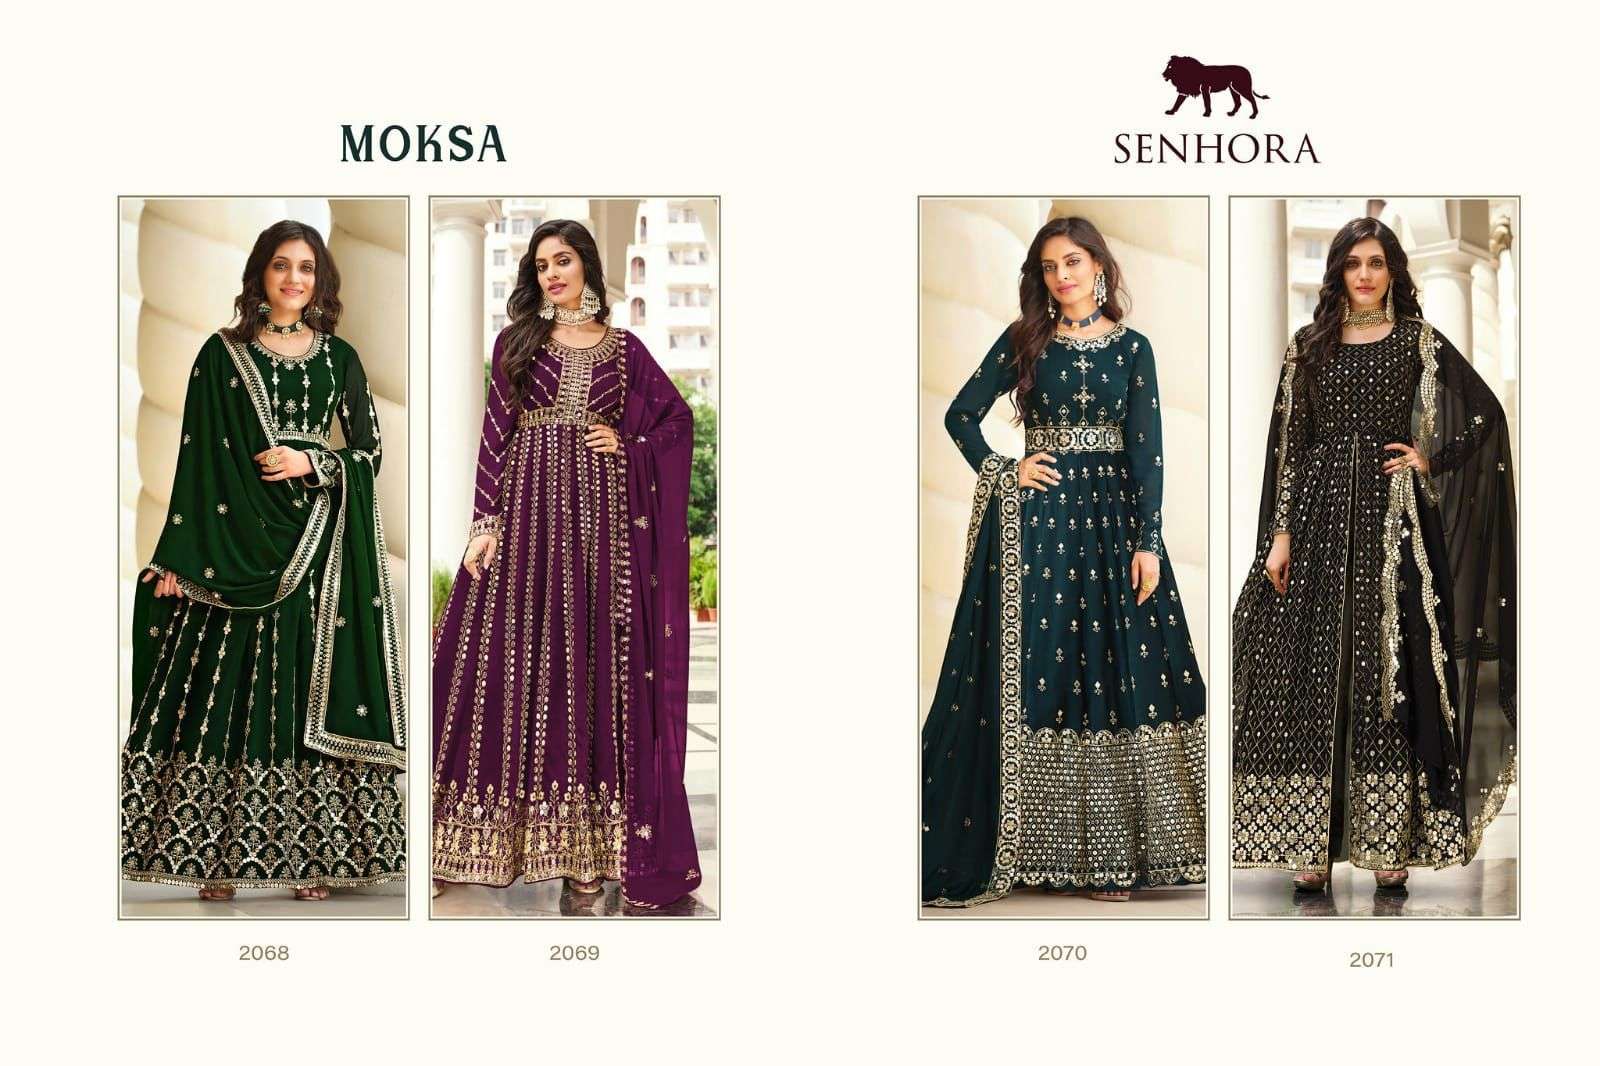 senhora dresses moksa 2068-2071 series party wear georgette salwar suits pratham exports surat